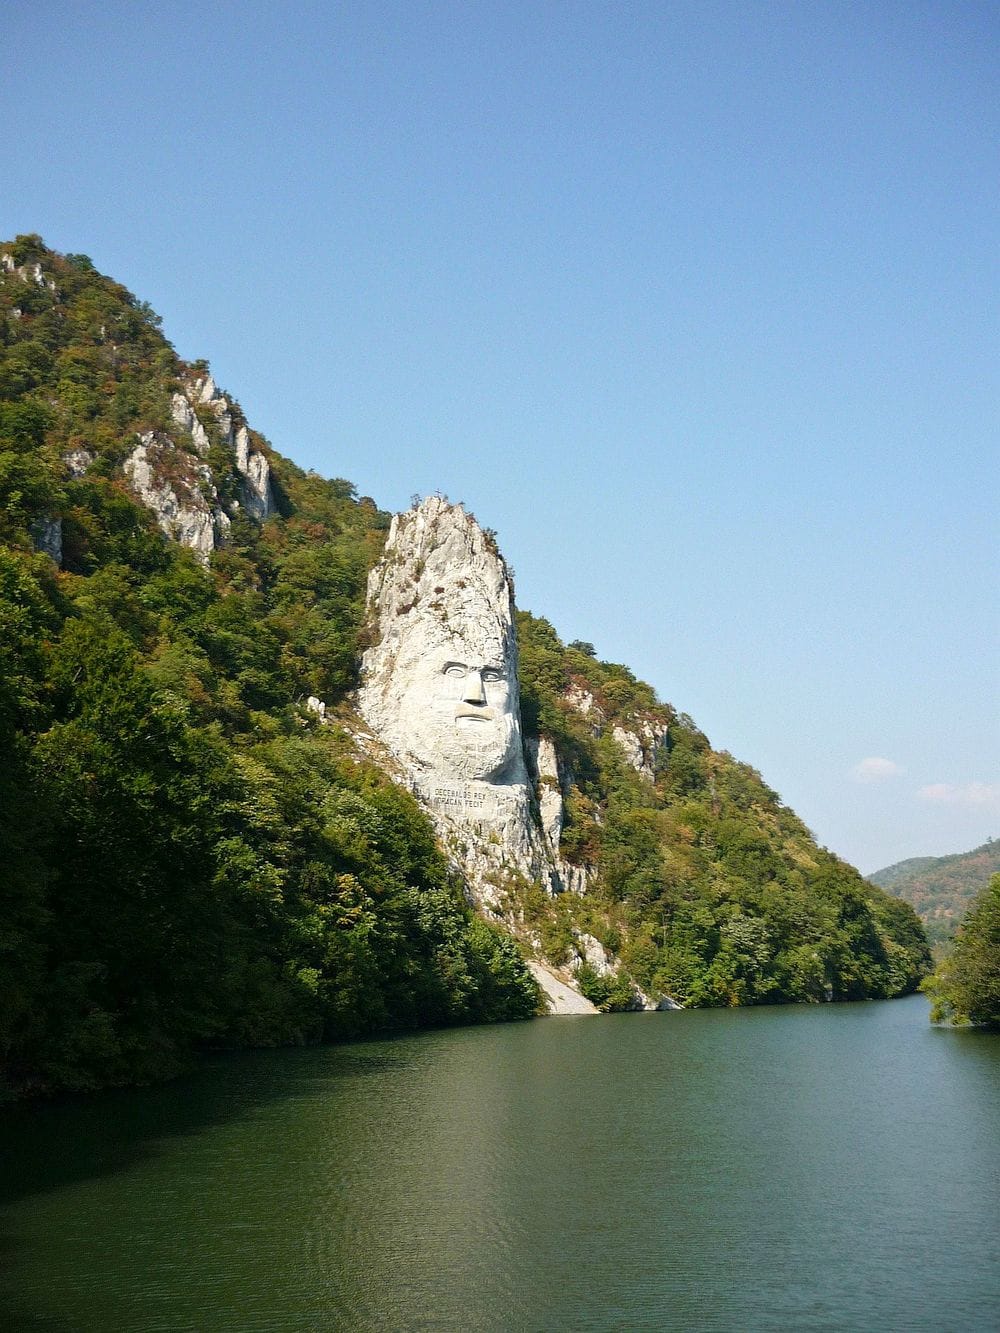 Largest Rock Sculpture in Europe